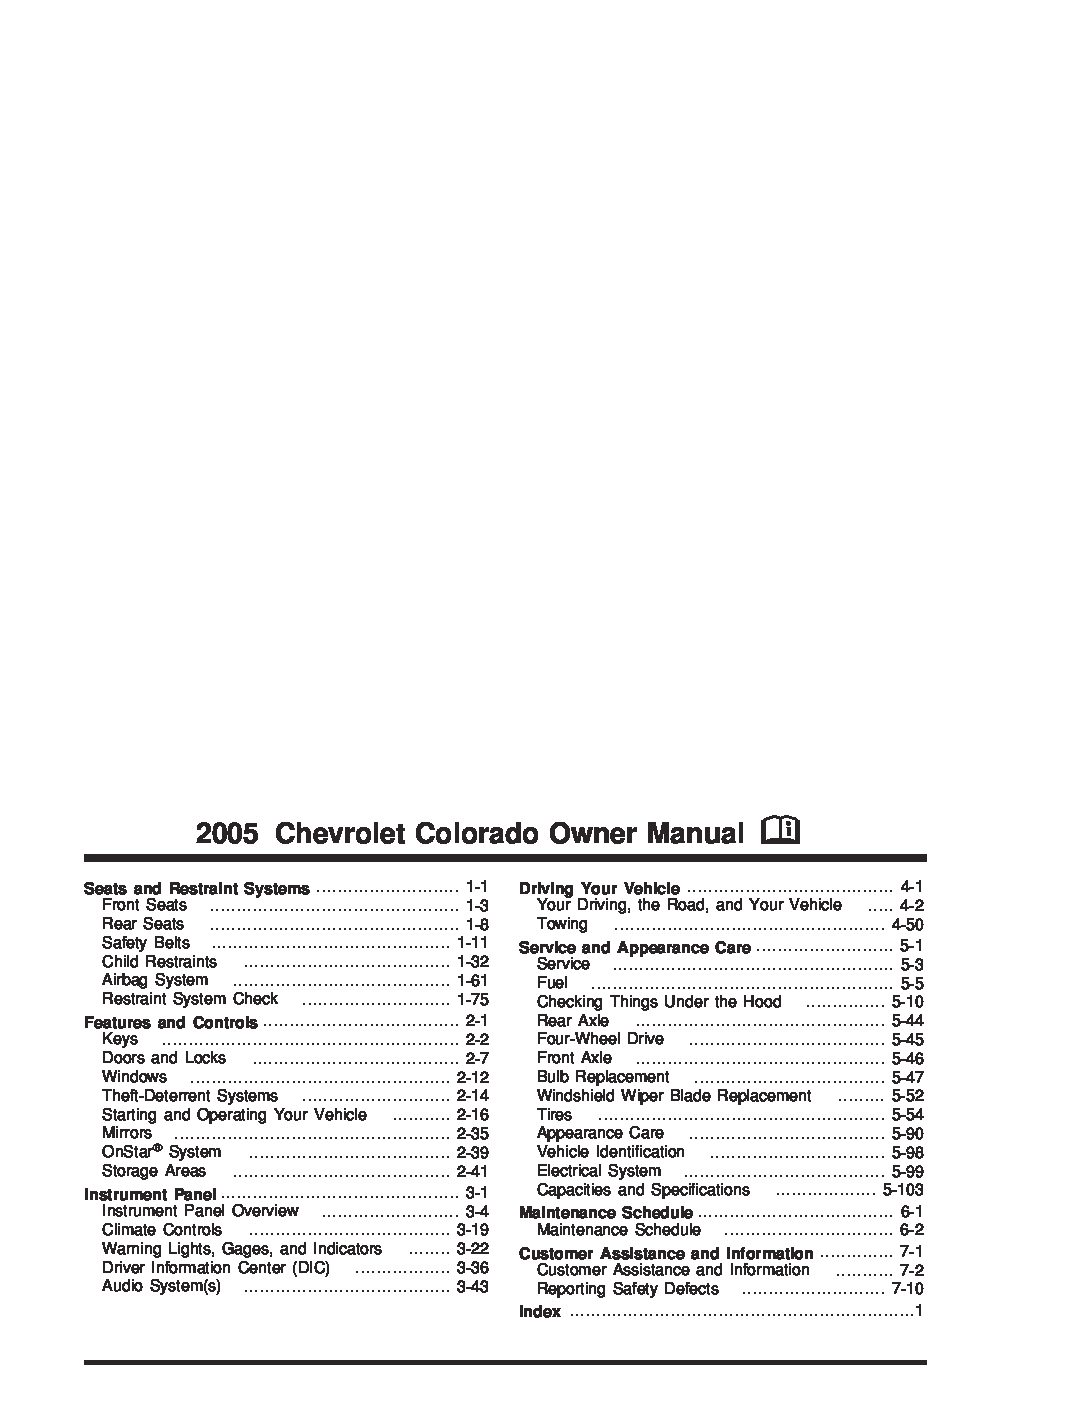 2005 Chevrolet Colorado Owner’s Manual Image